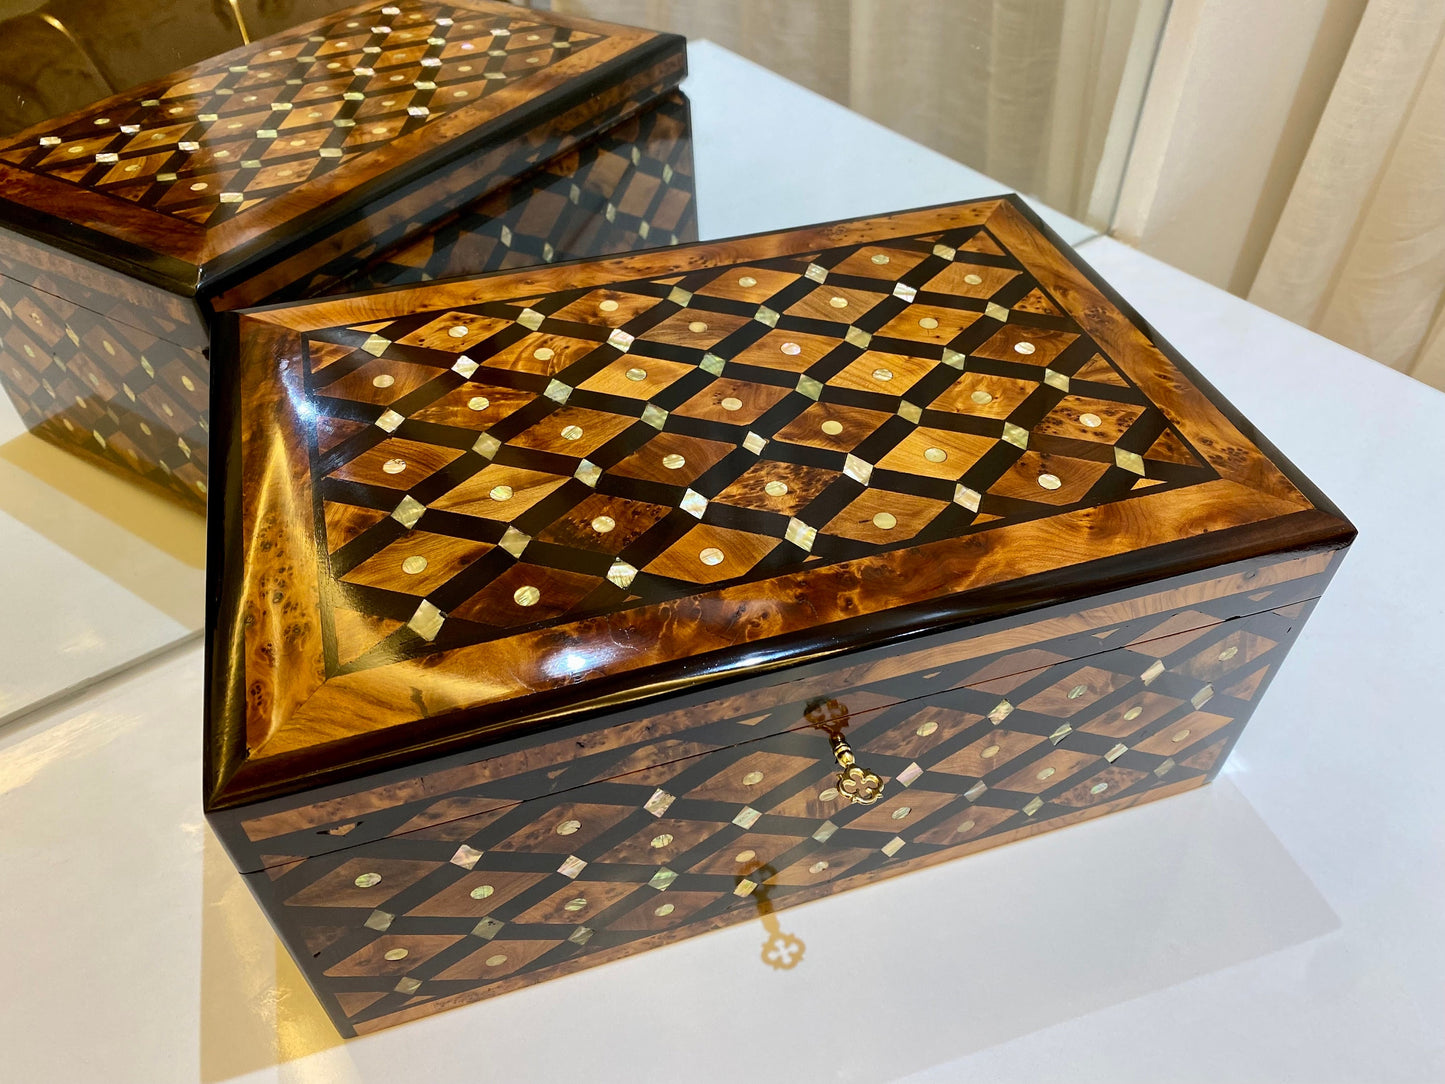 12x7.8 Royal Solid lockable Jewelry Box,large jewelry Thuya Burl wooden Box Keepsake Storage Inlaid with Mother of pearls, burned lemon wood